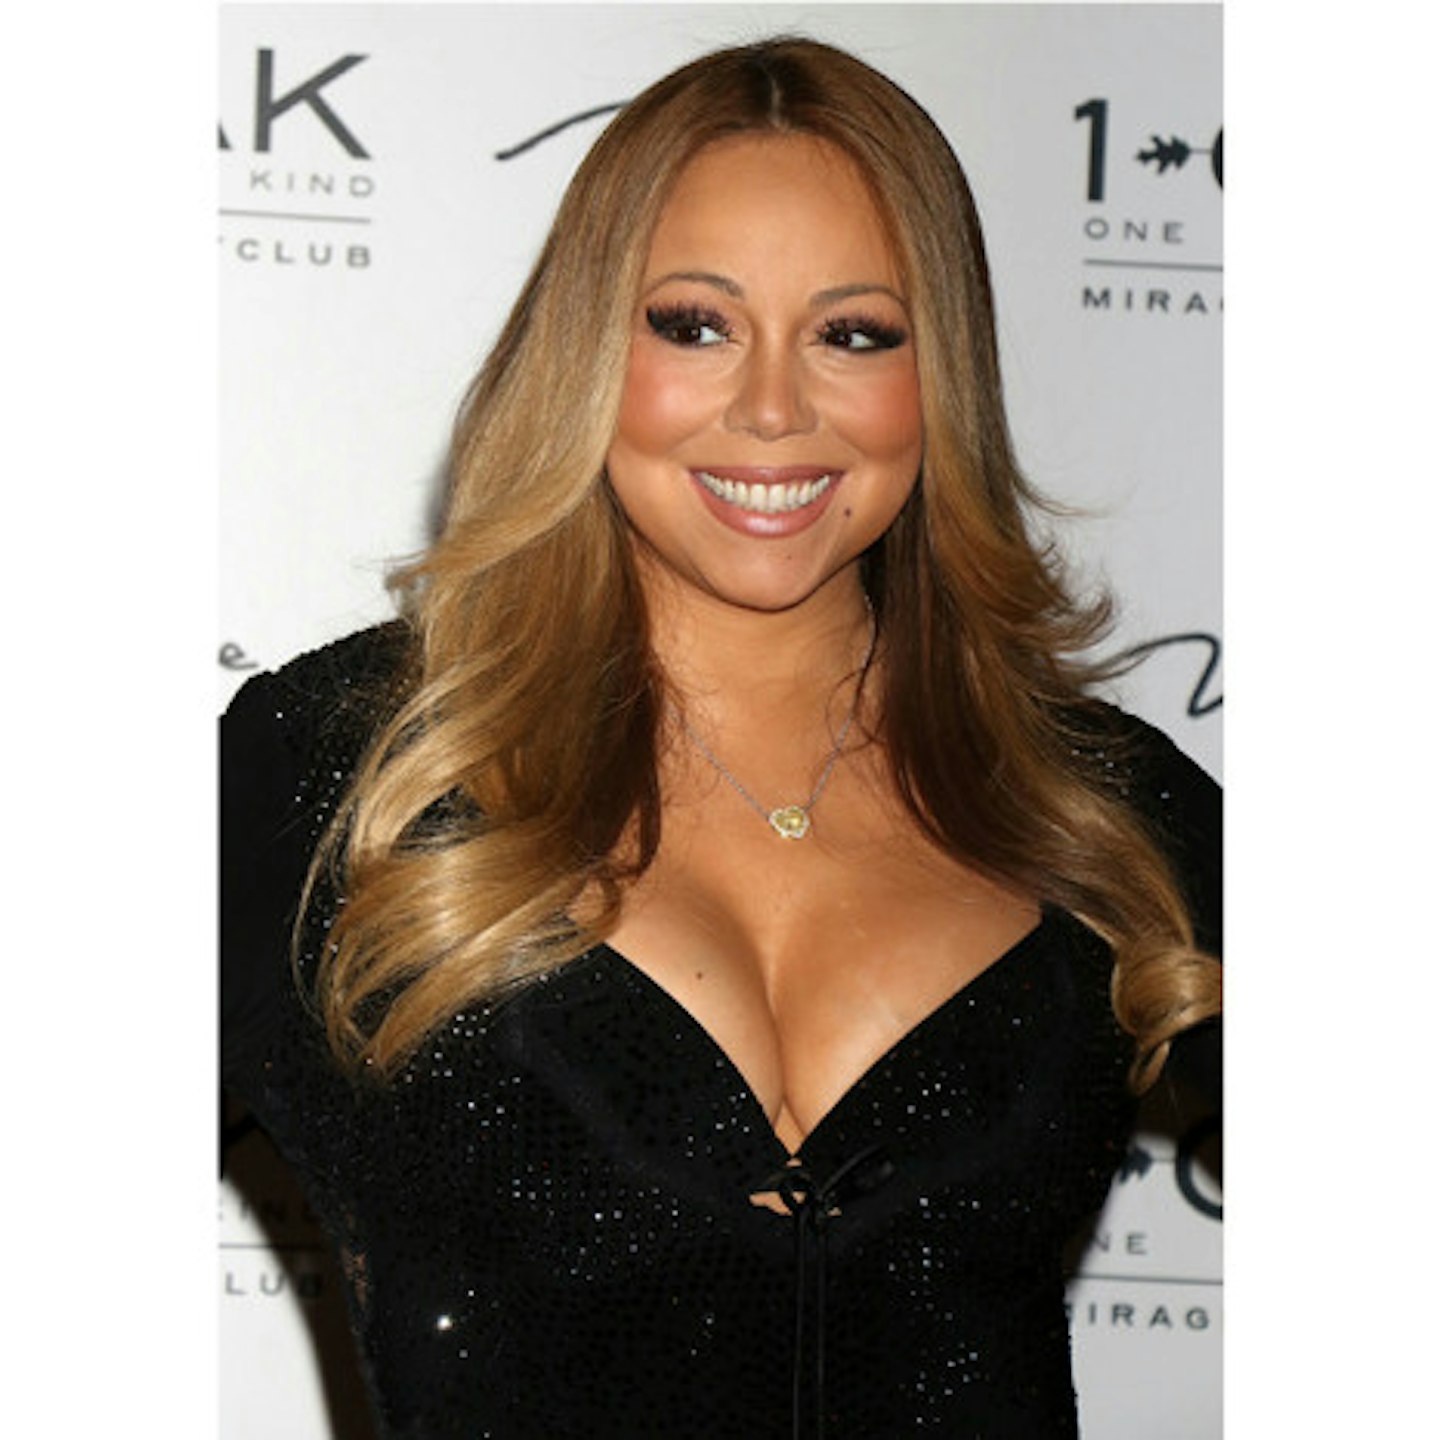 It's no wonder Mariah can't stop smiling!